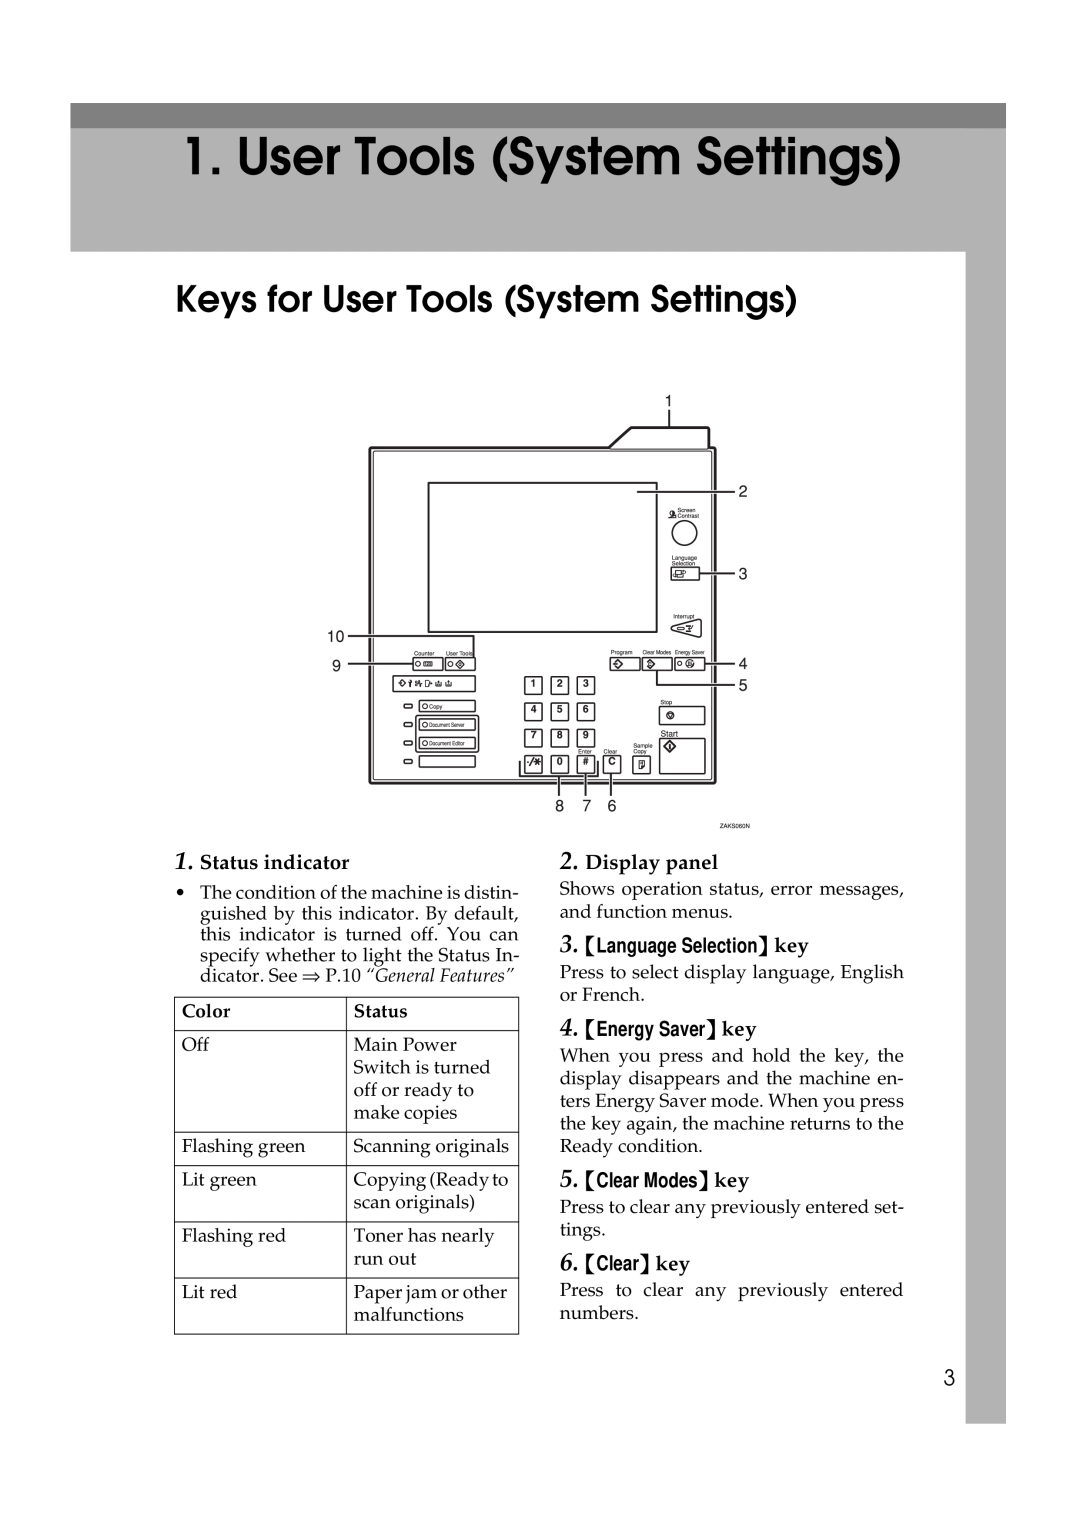 Savin 10502 Keys for User Tools System Settings, Language Selection key, Energy Saverkey, Clear Modes key, Color, Status 